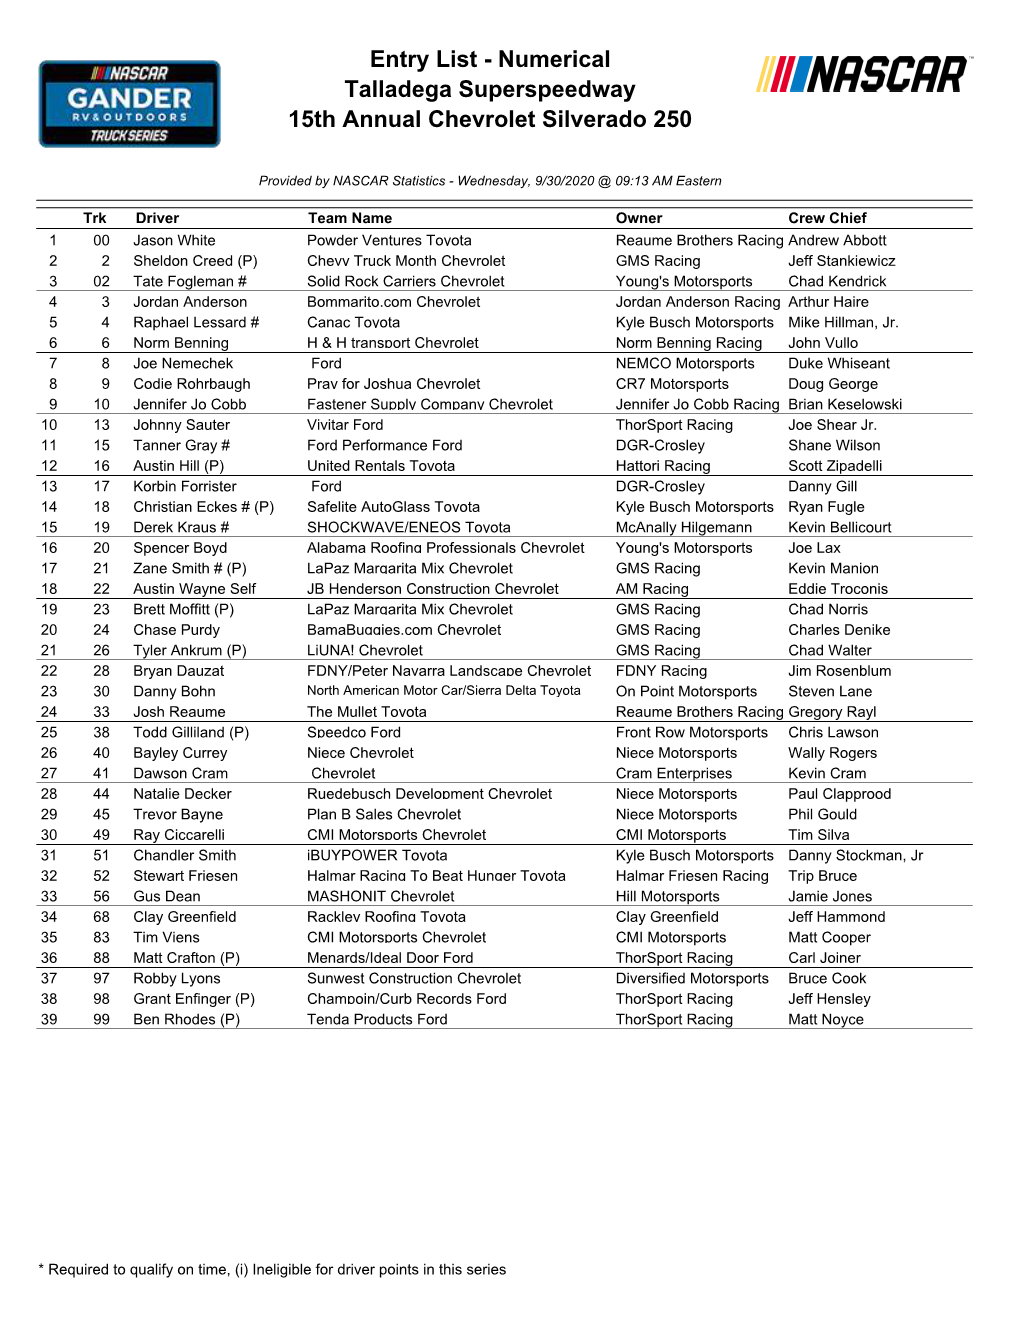 Entry List - Numerical Talladega Superspeedway 15Th Annual Chevrolet Silverado 250